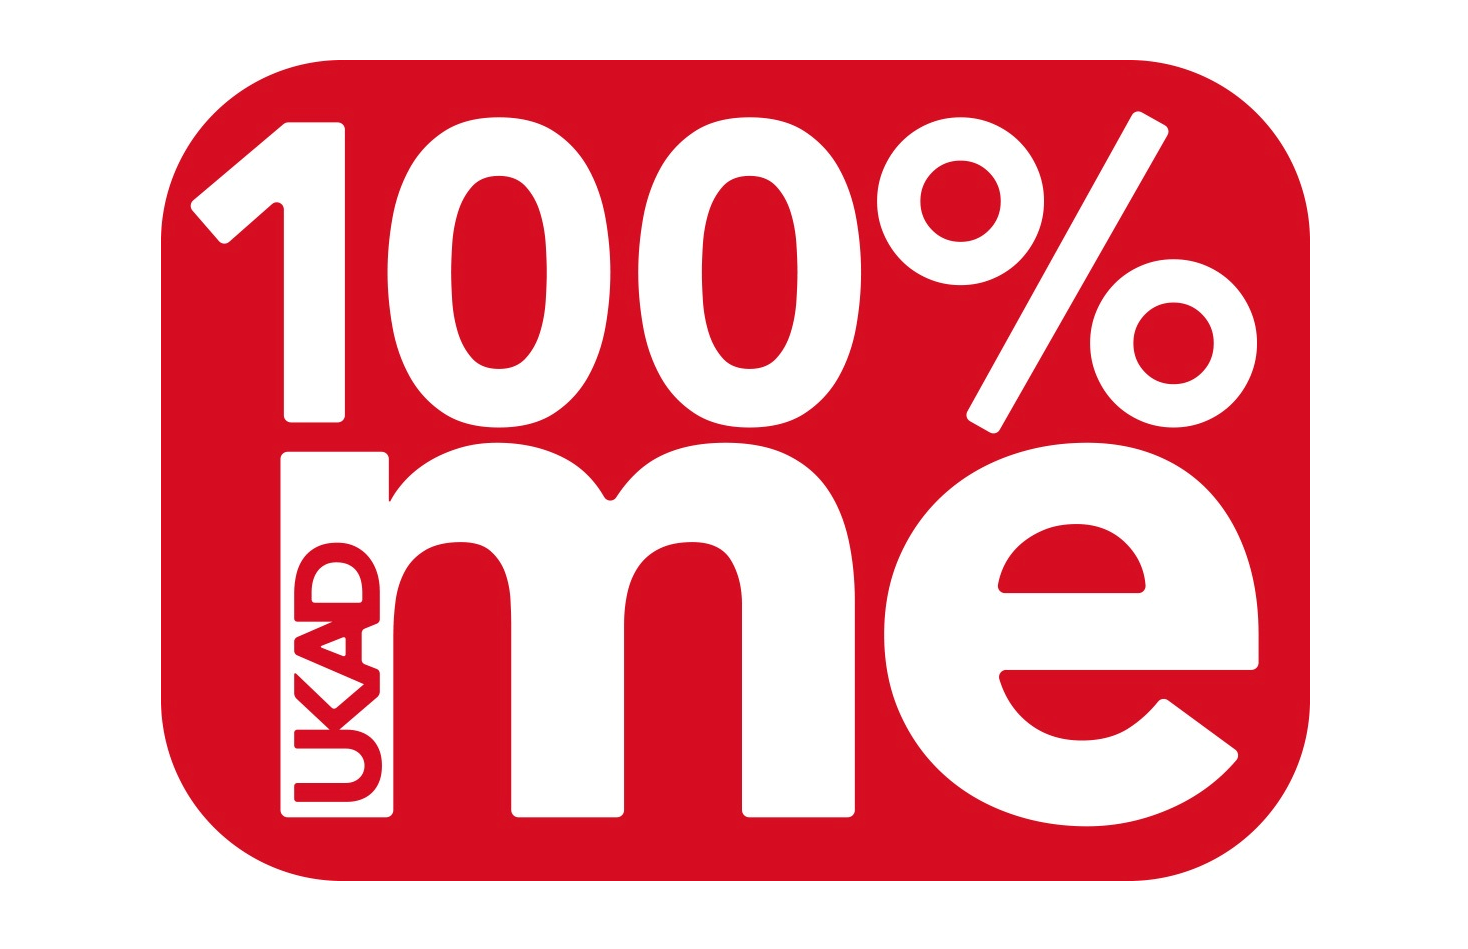 The 100% me logo